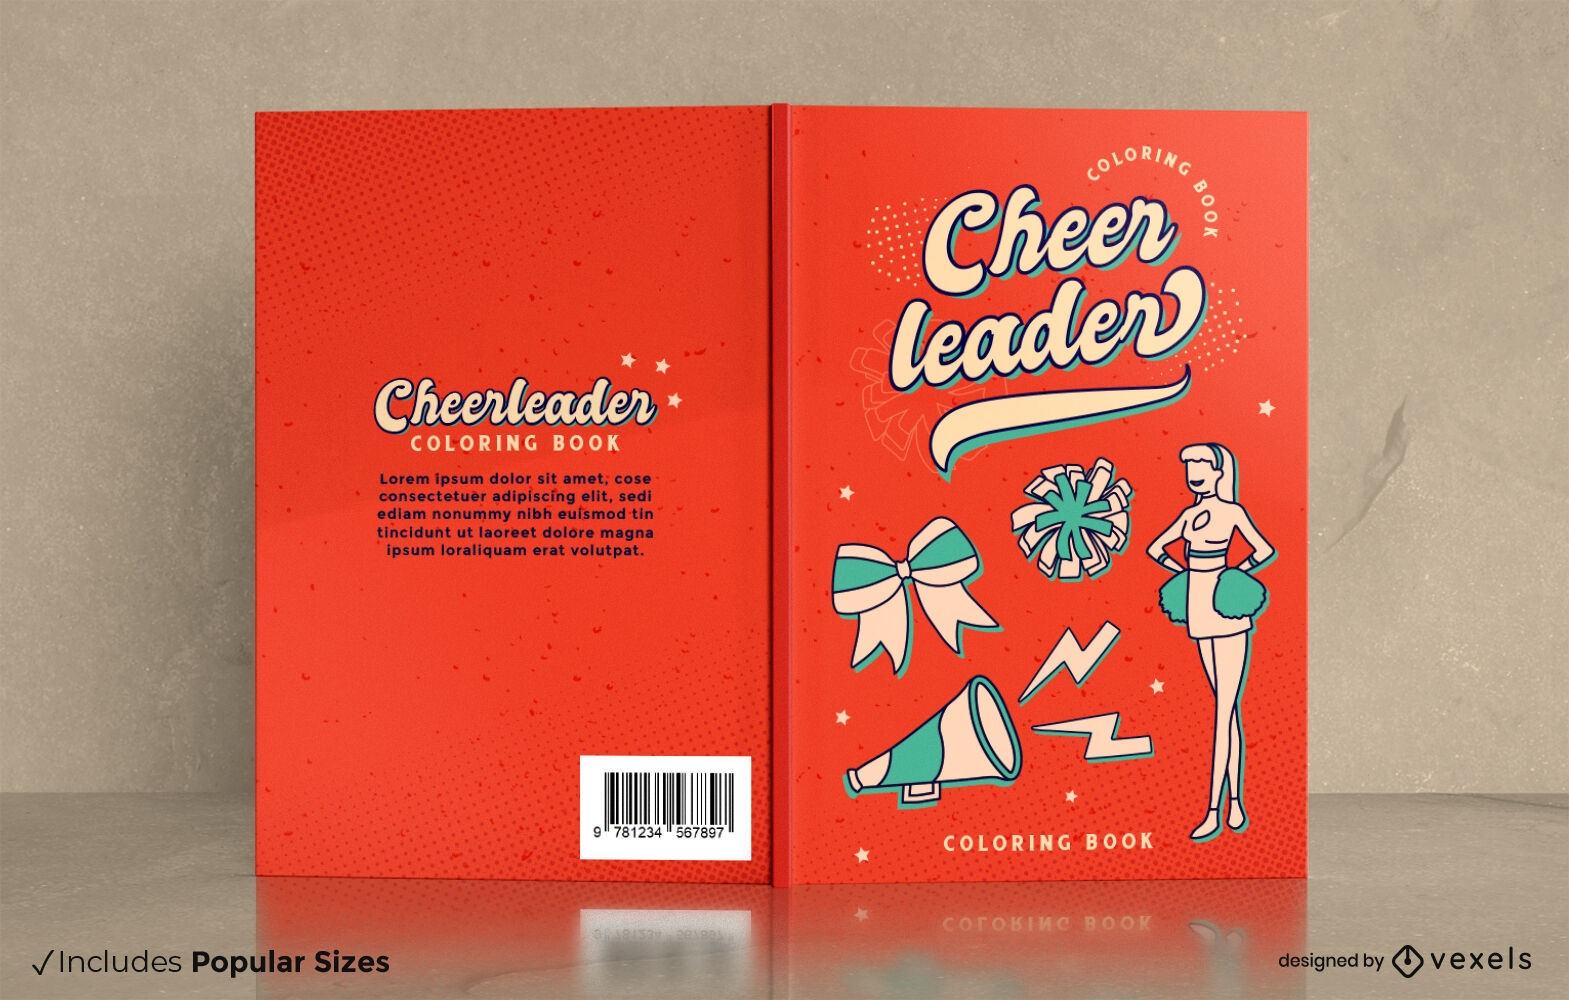 Cheerleader book cover design